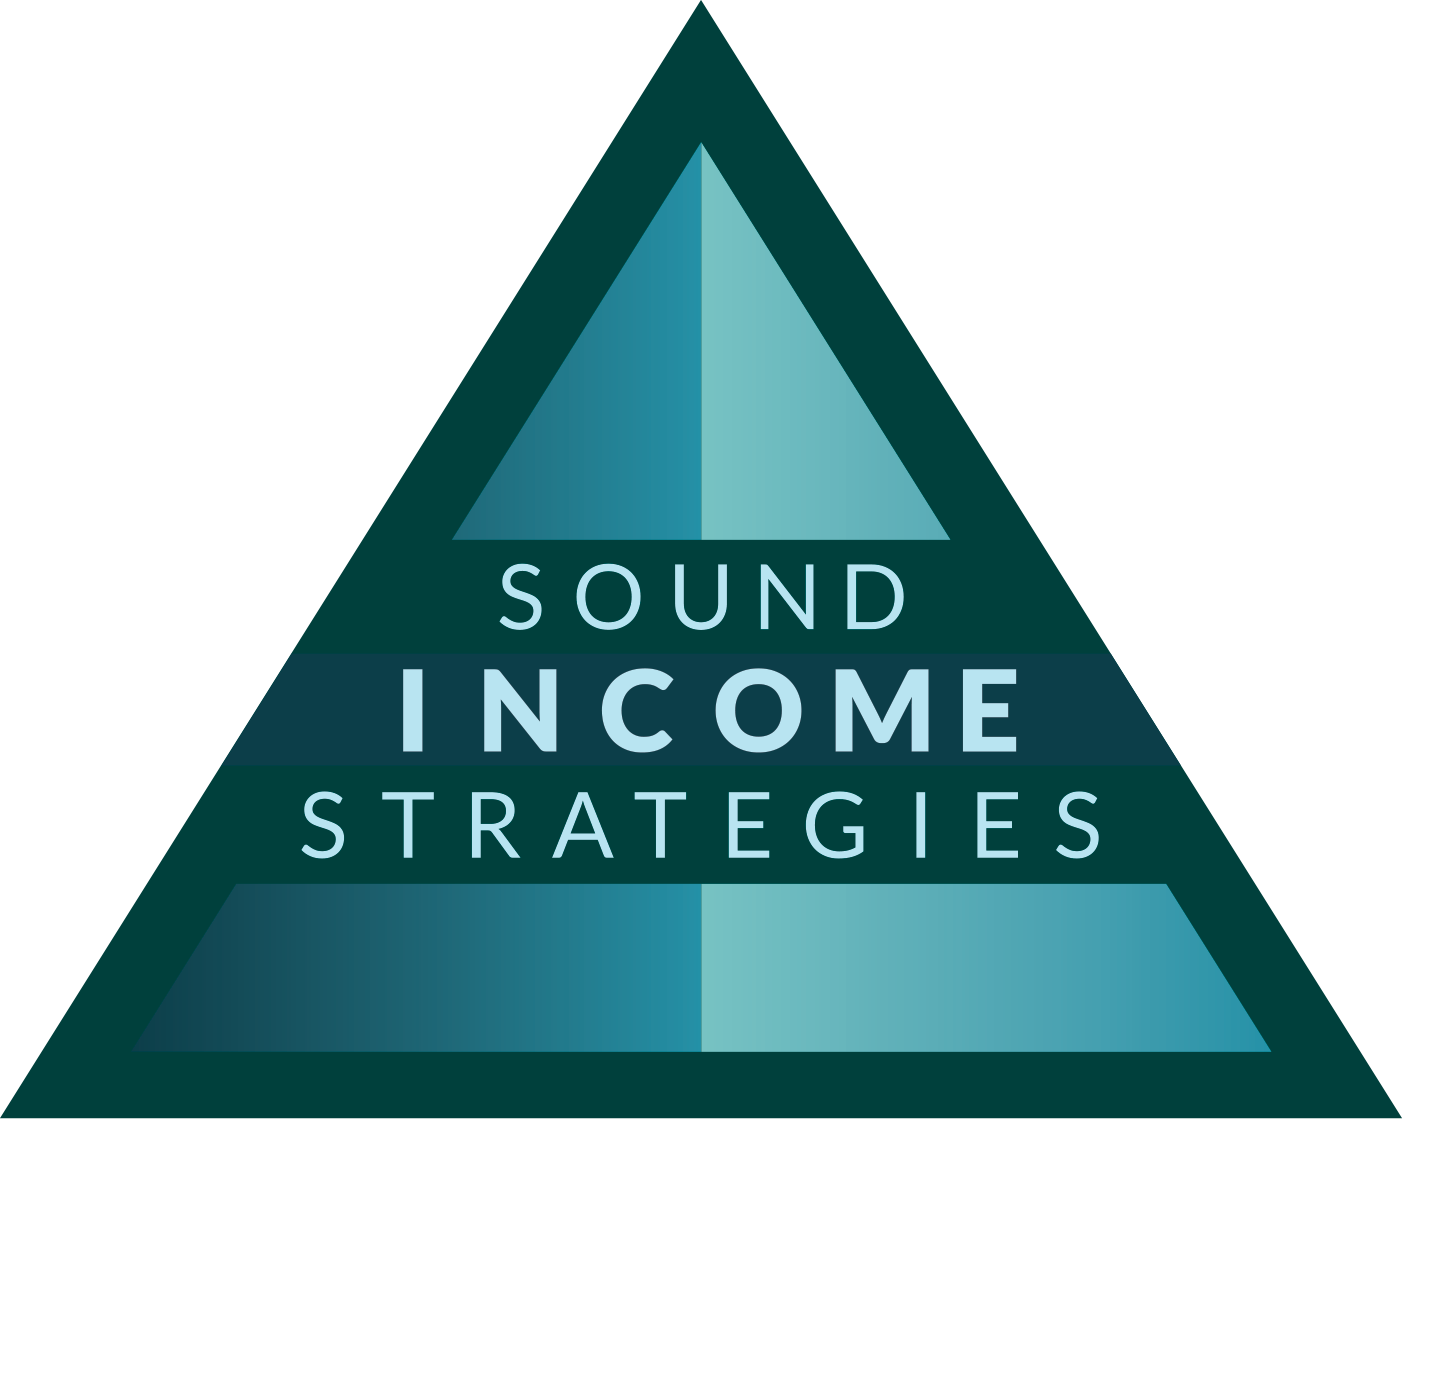 Sound Income Strategies